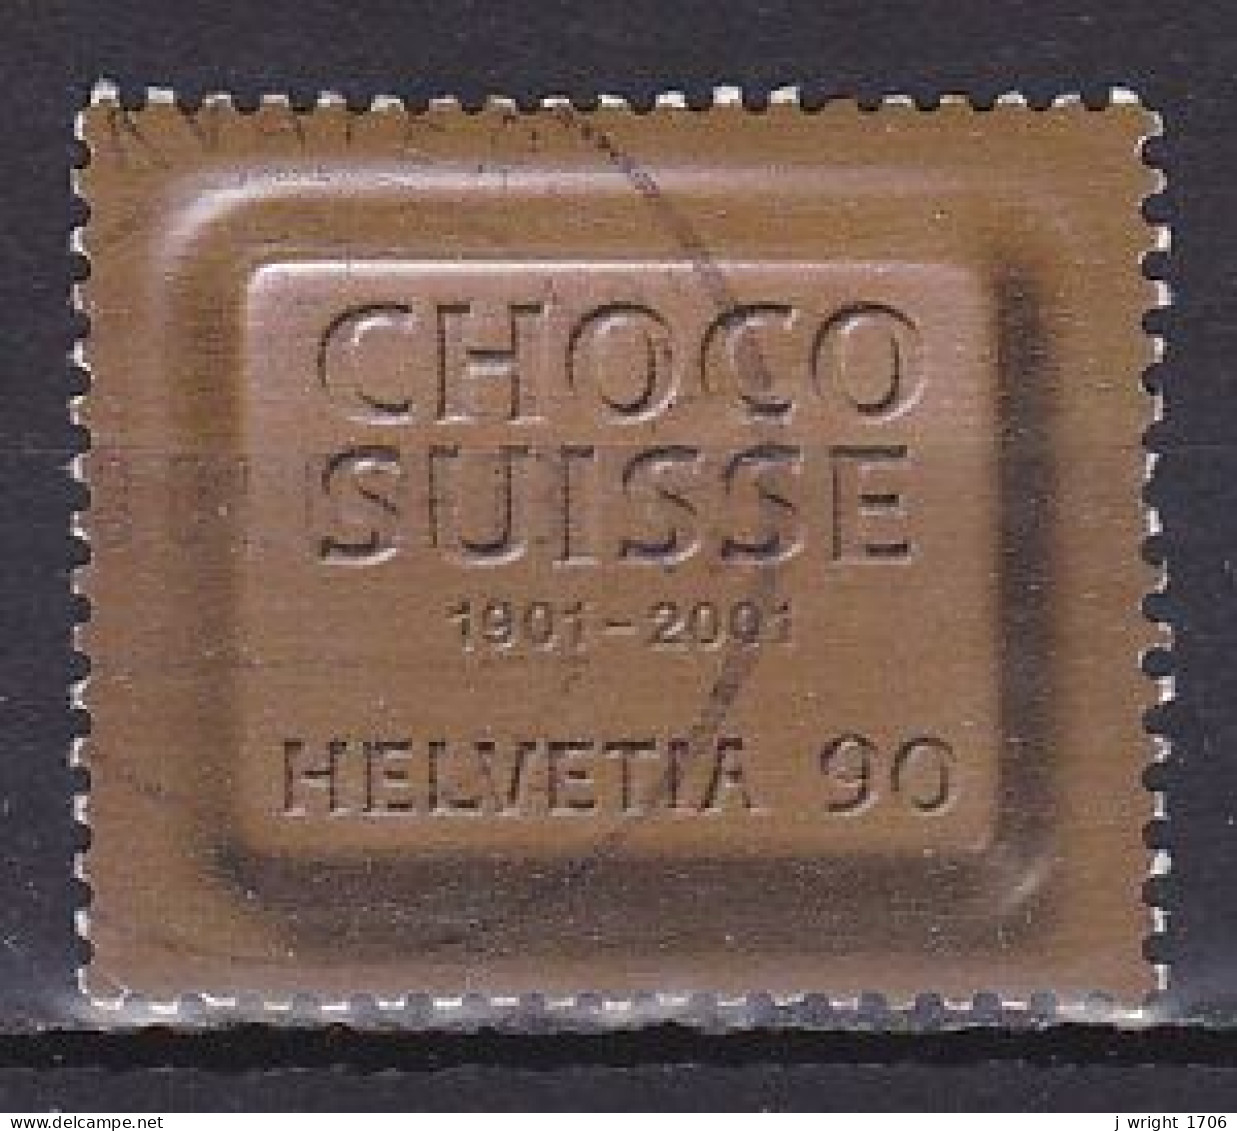 Switzerland, 2001, Chocosuisse Centenary, 90c, USED - Used Stamps